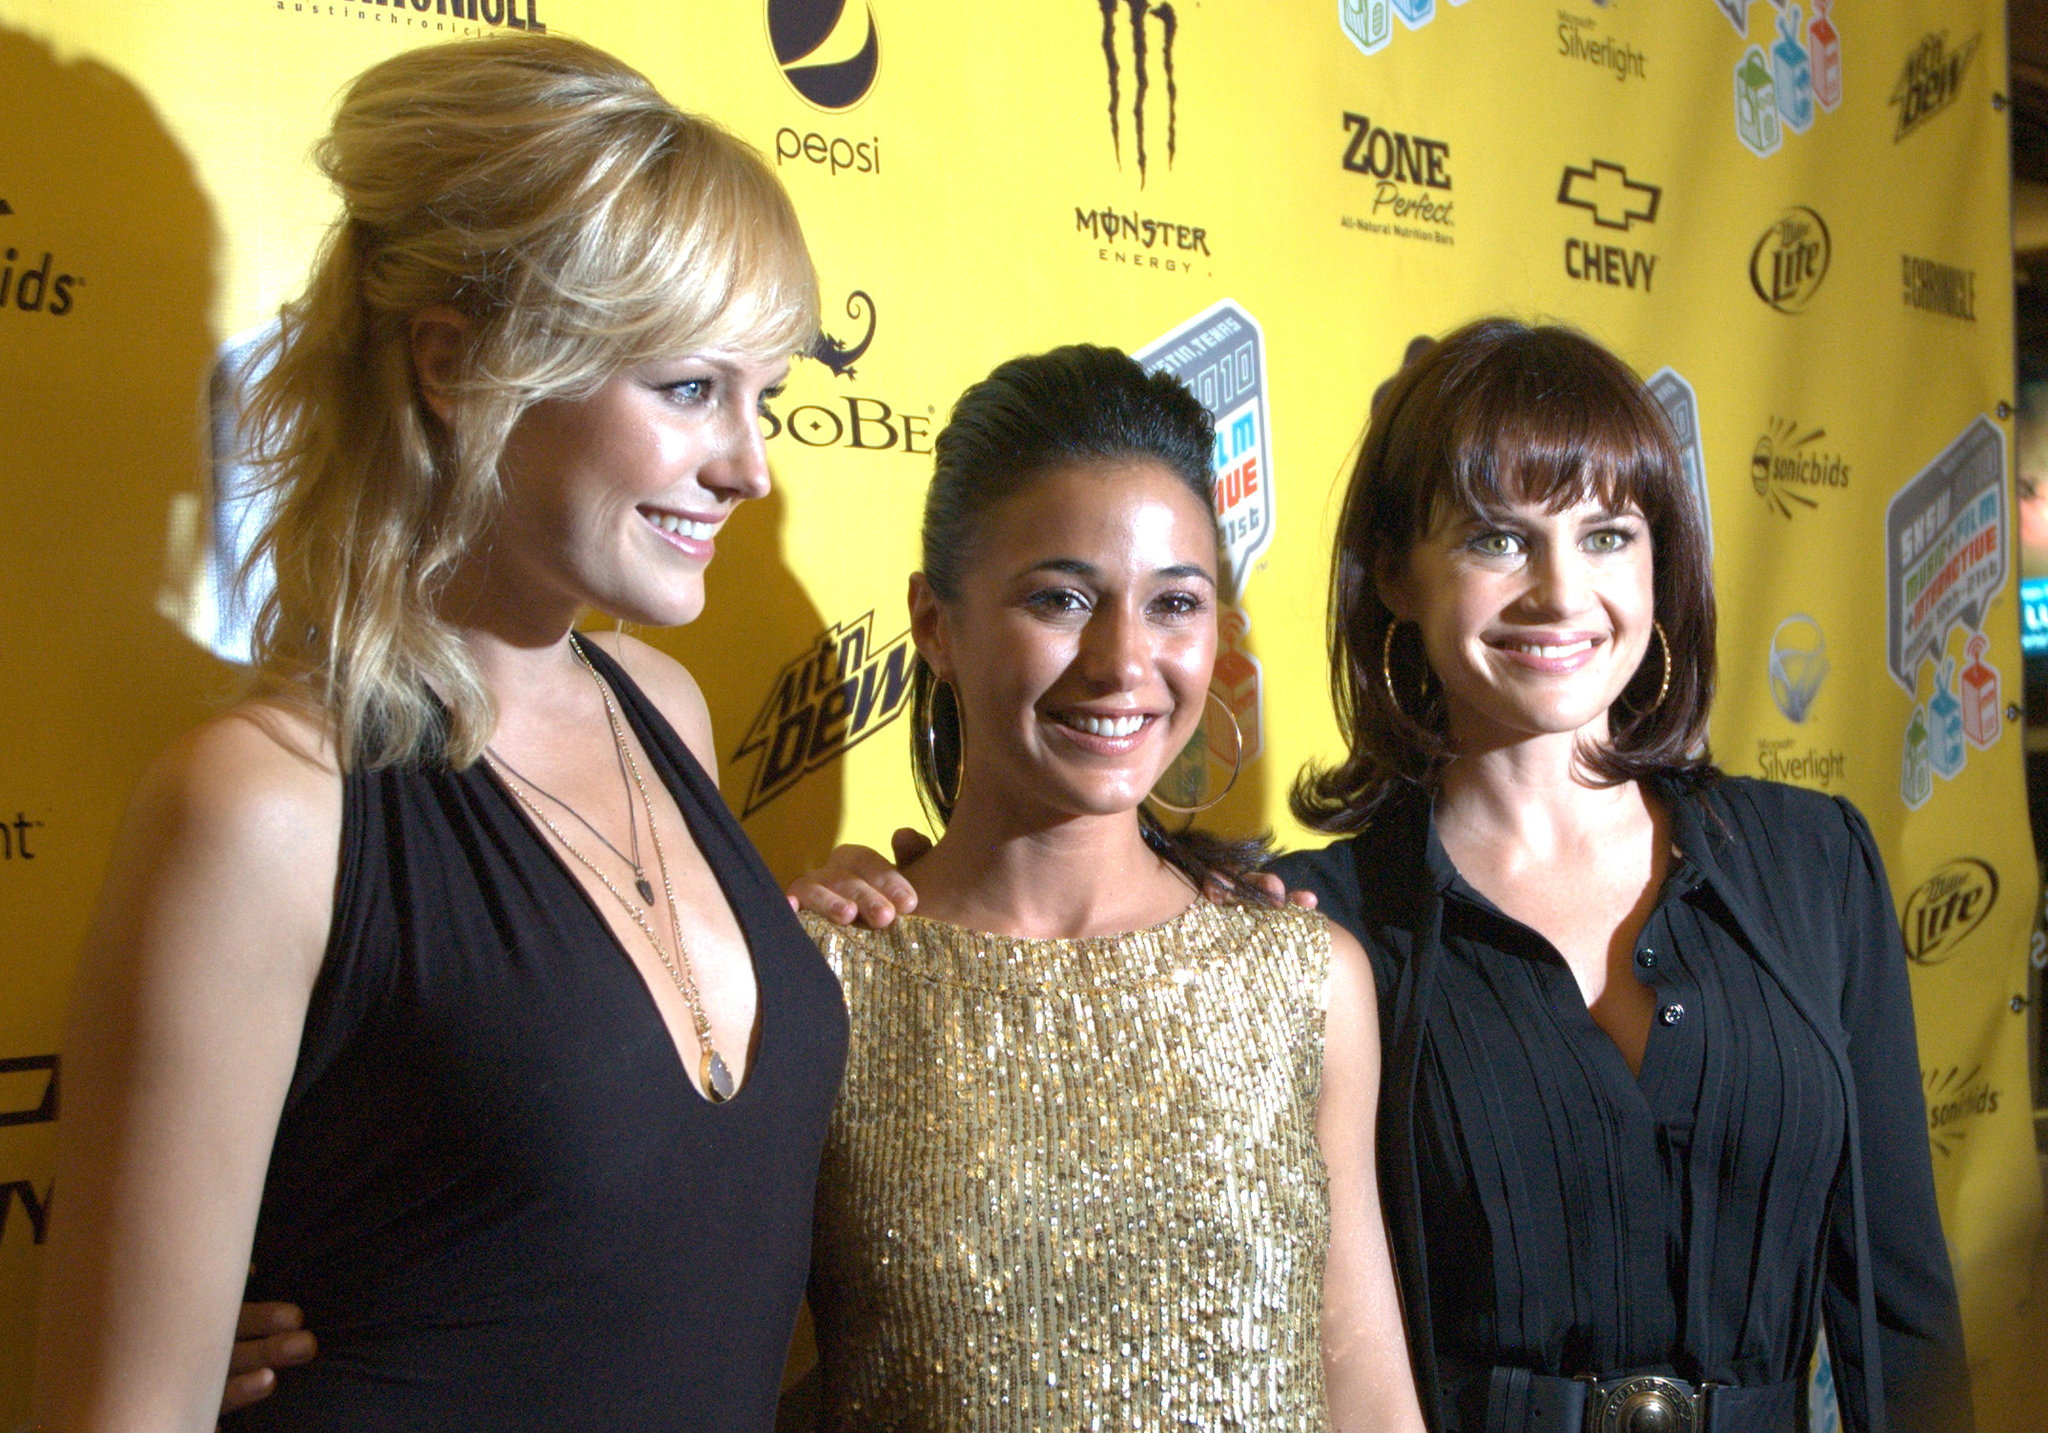 Carla Gugino, Emmanuelle Chriqui and Malin Akerman at event of Elektra Luxx (2010)